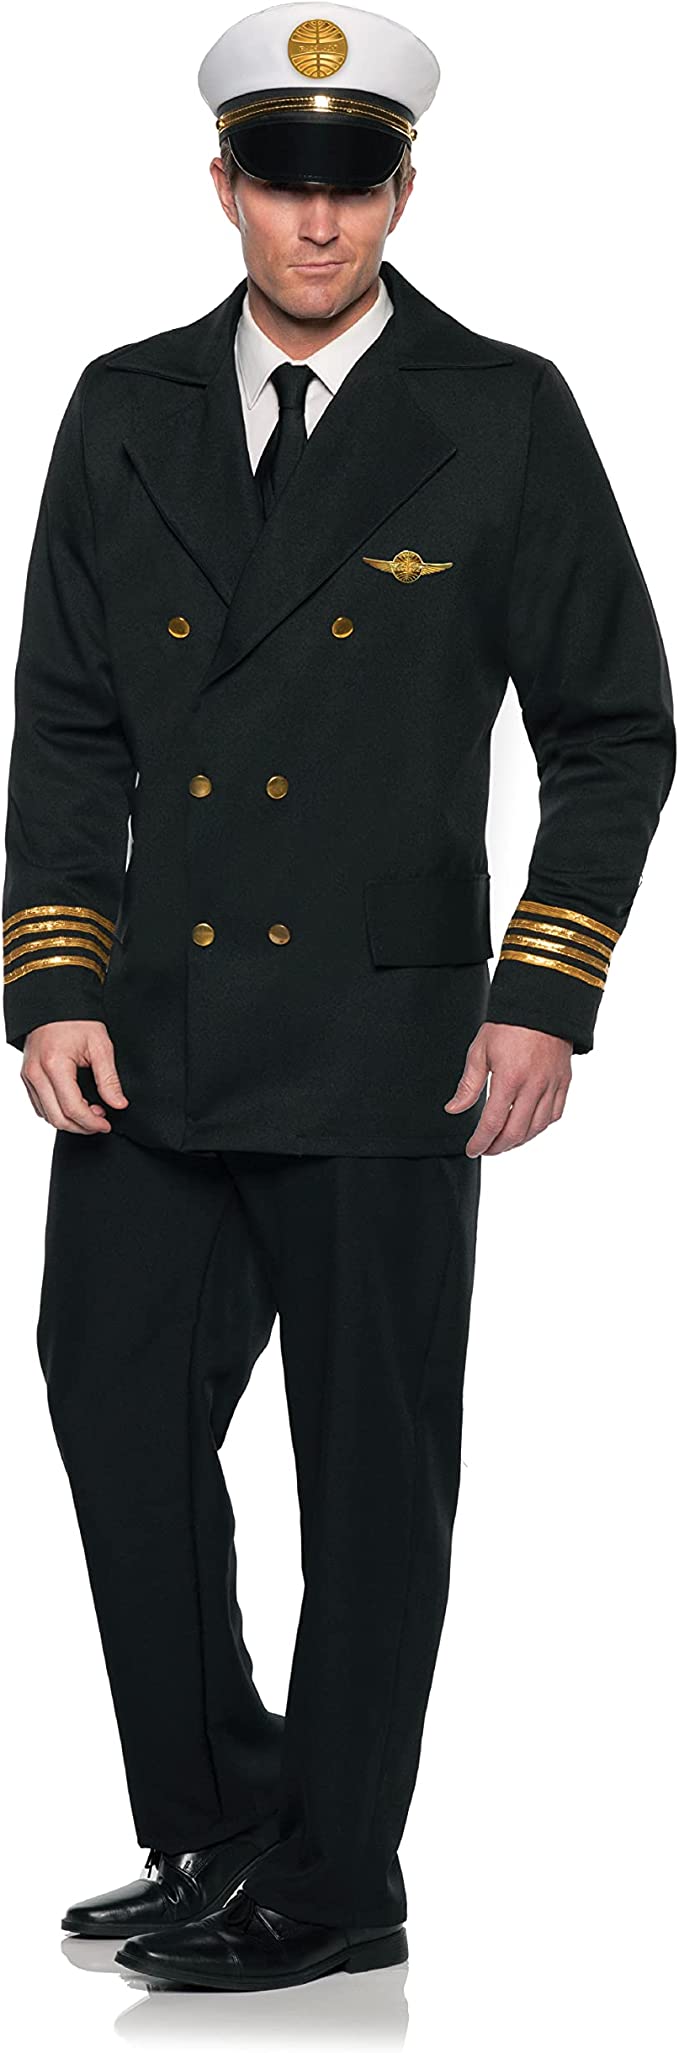 Pan Am Deluxe Pilot - Adult Costume